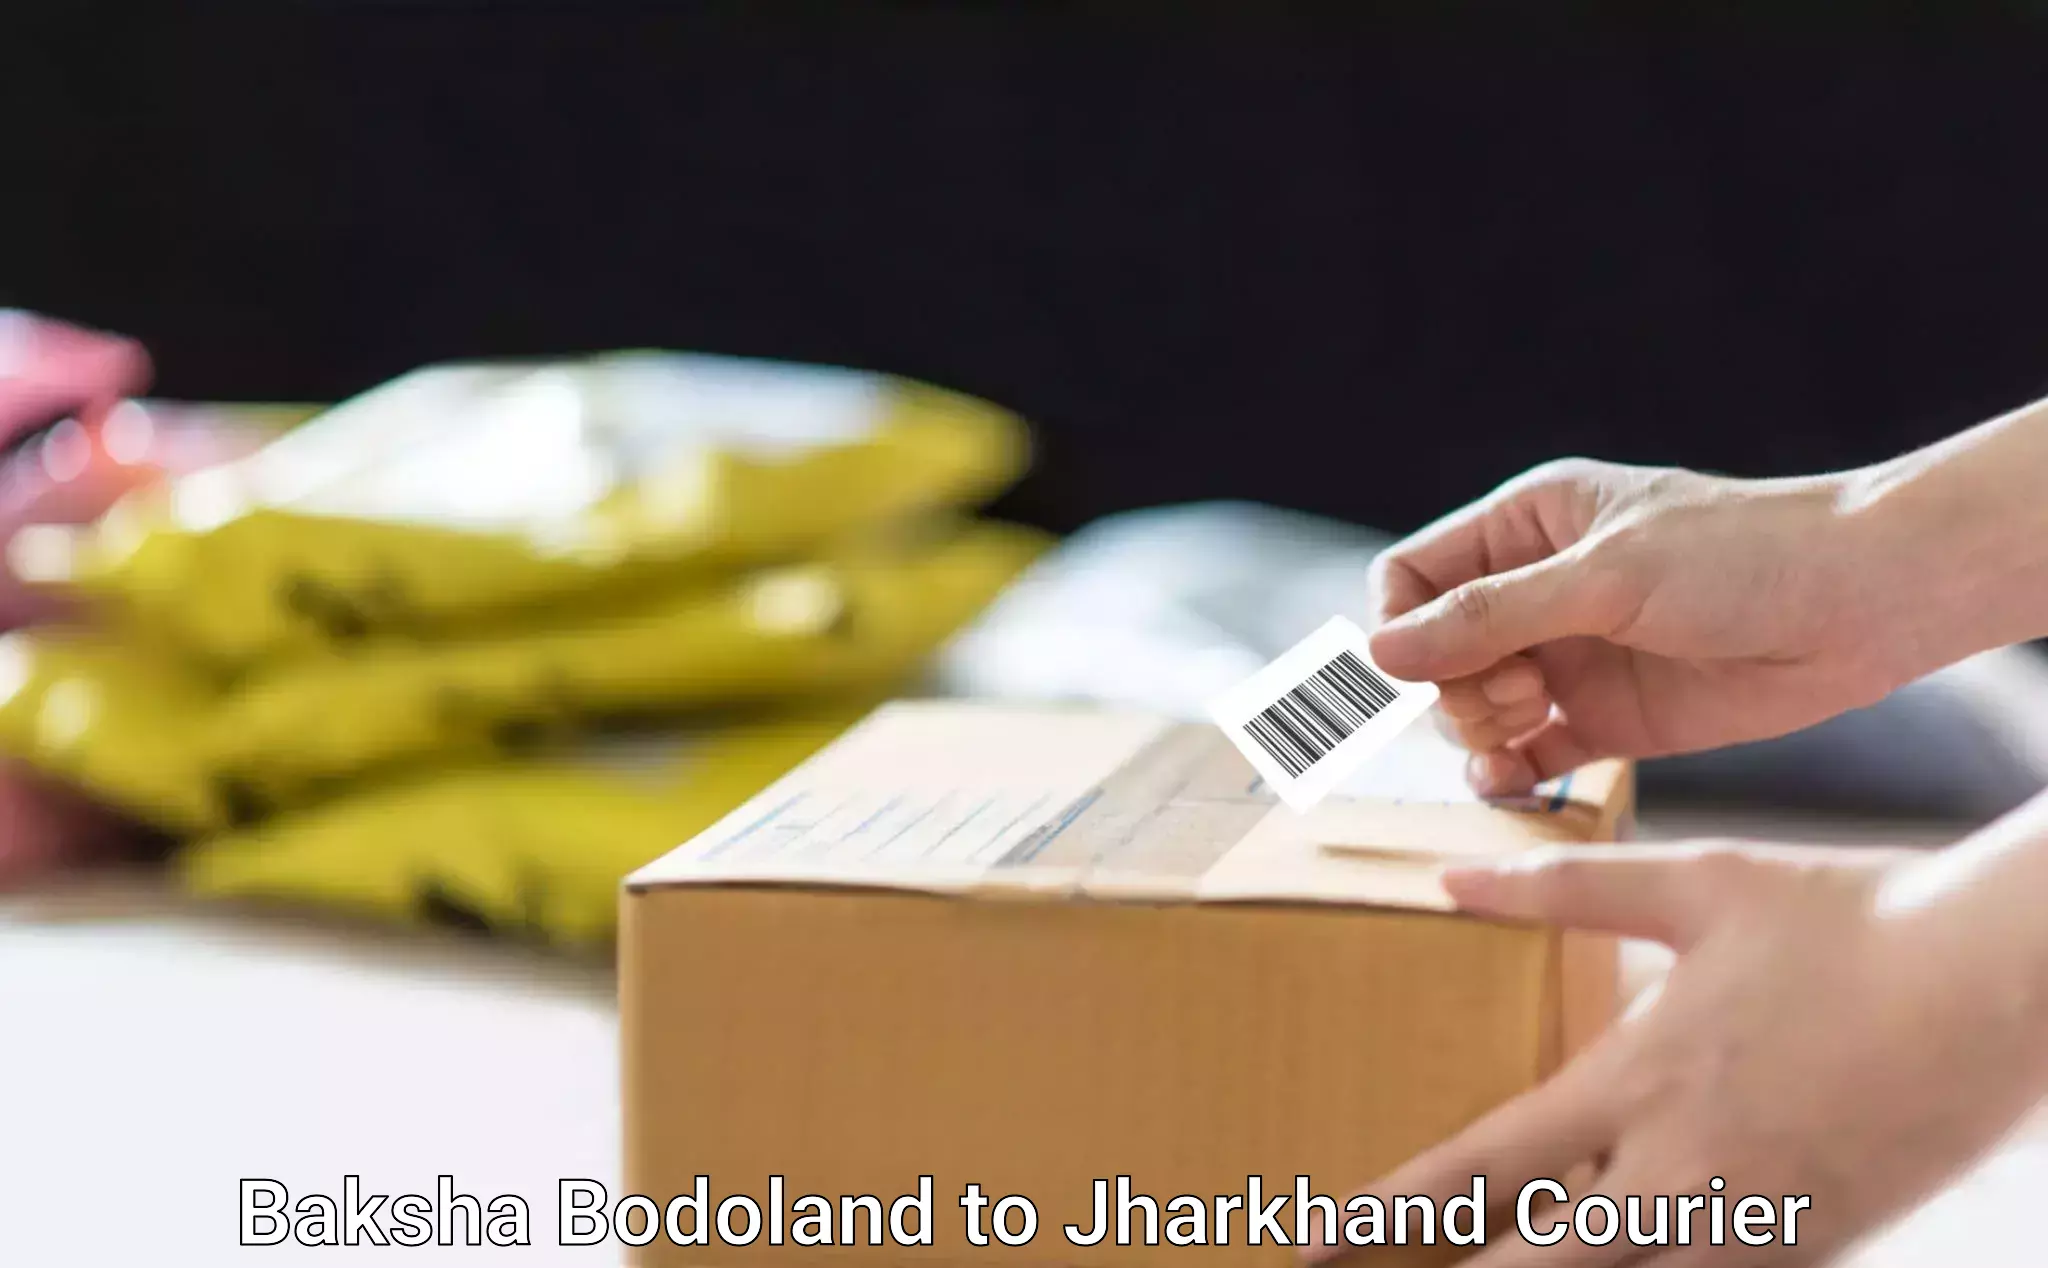 Professional courier handling Baksha Bodoland to Ghatshila